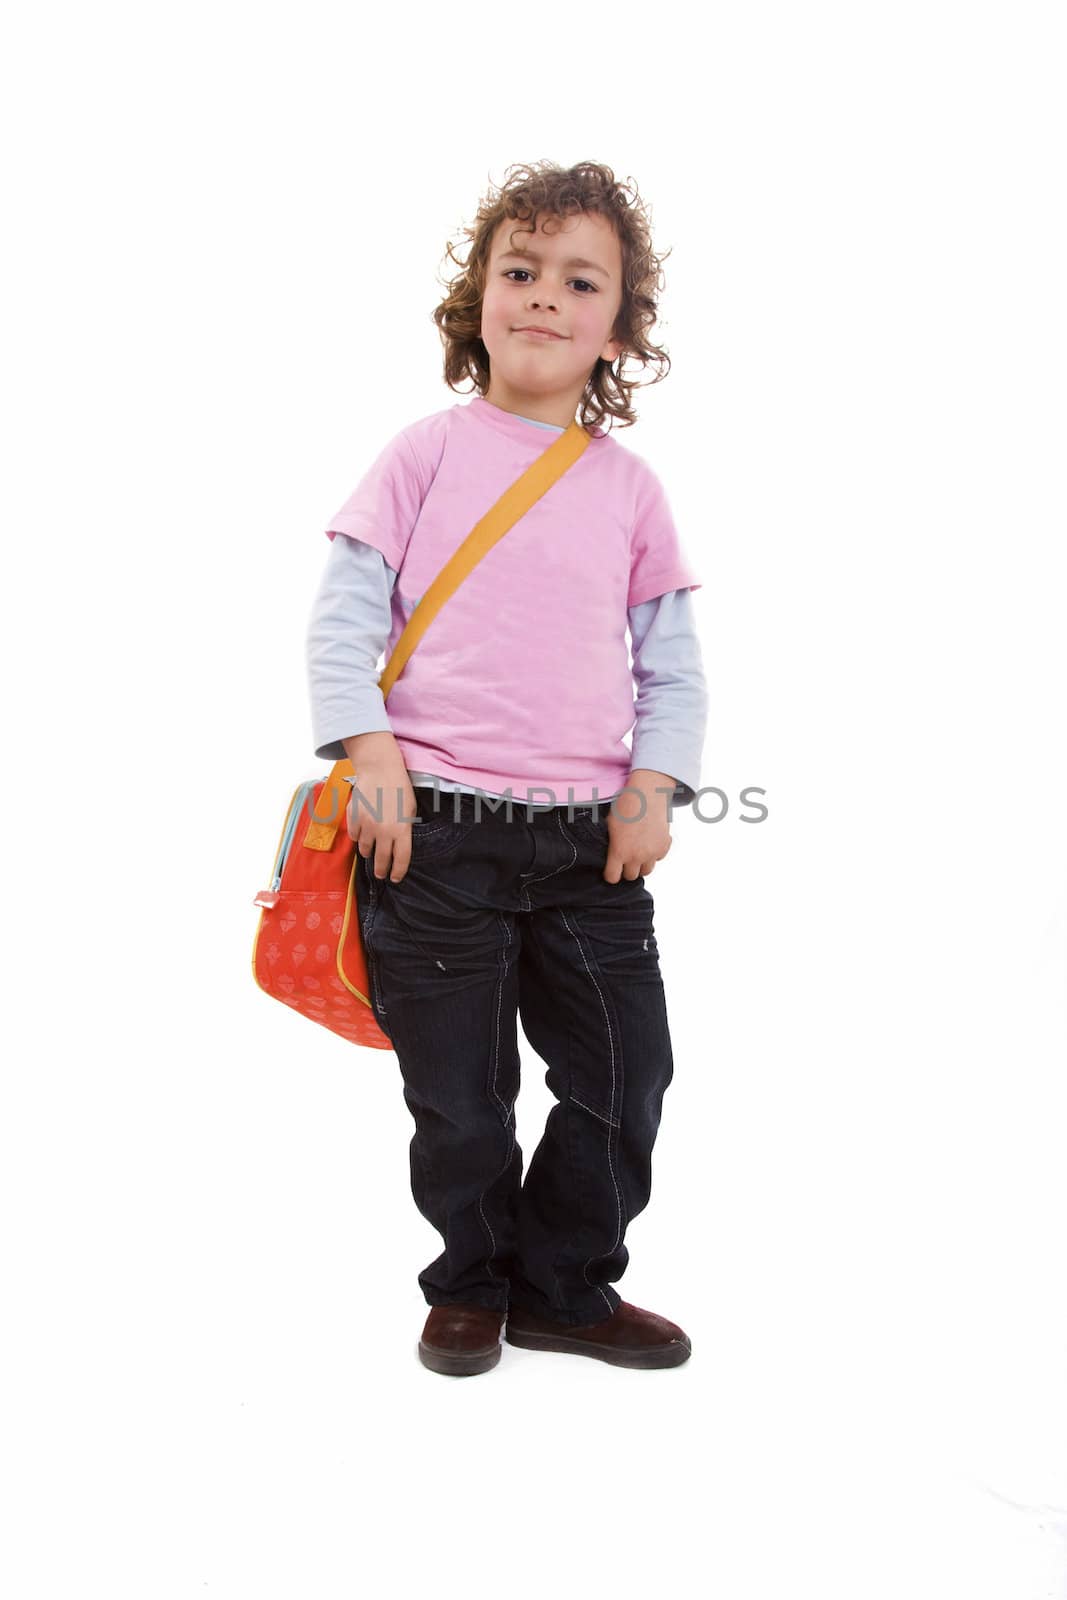  kid with school bag
